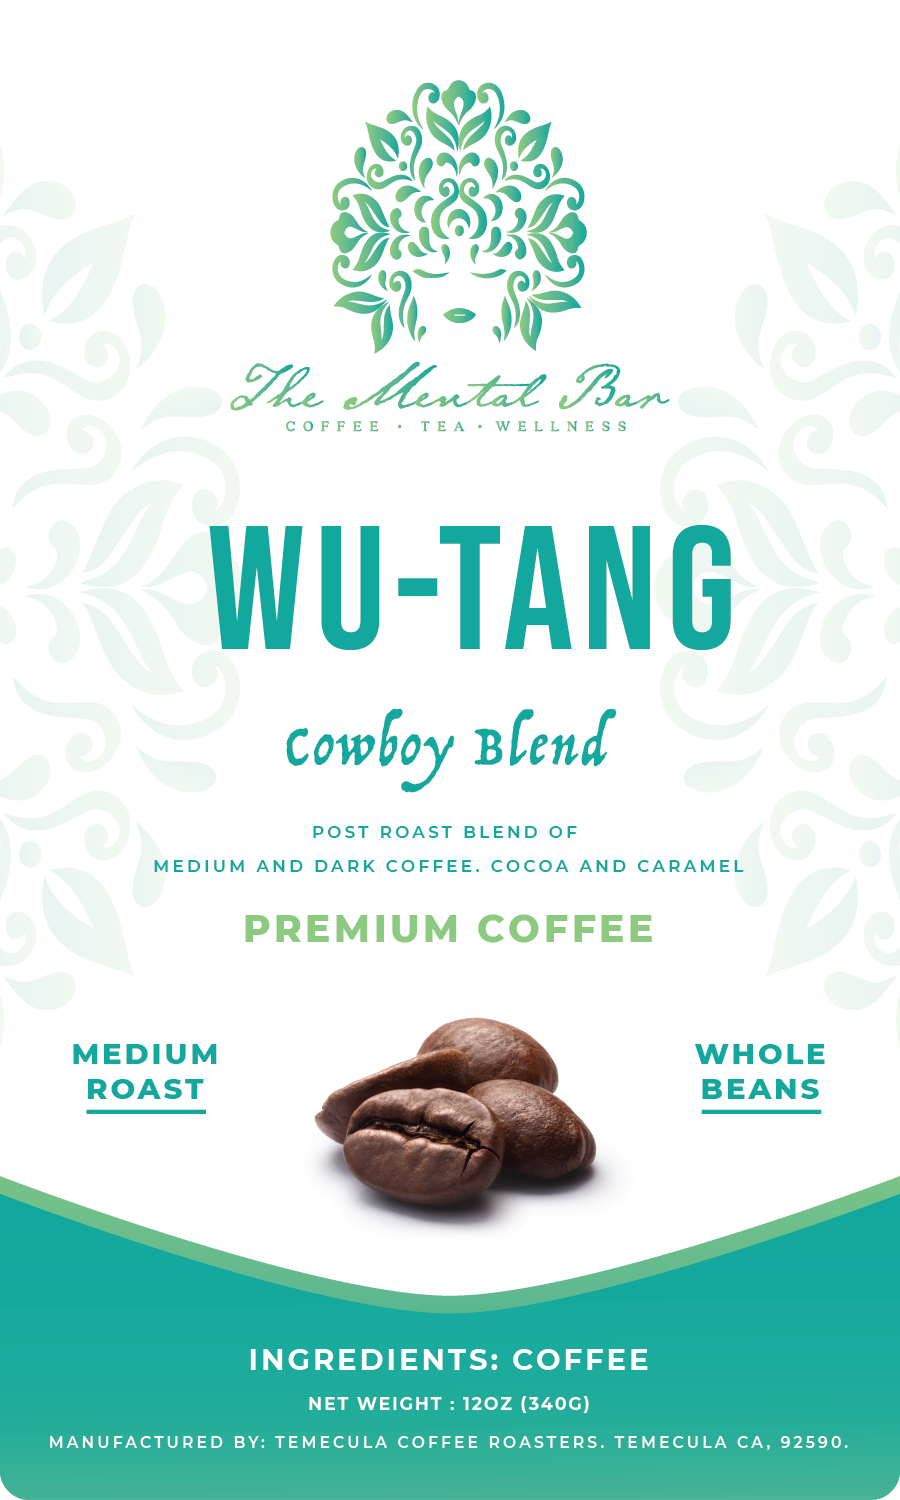 Wu-tang (Cowboy Blend) - The Mental Bar